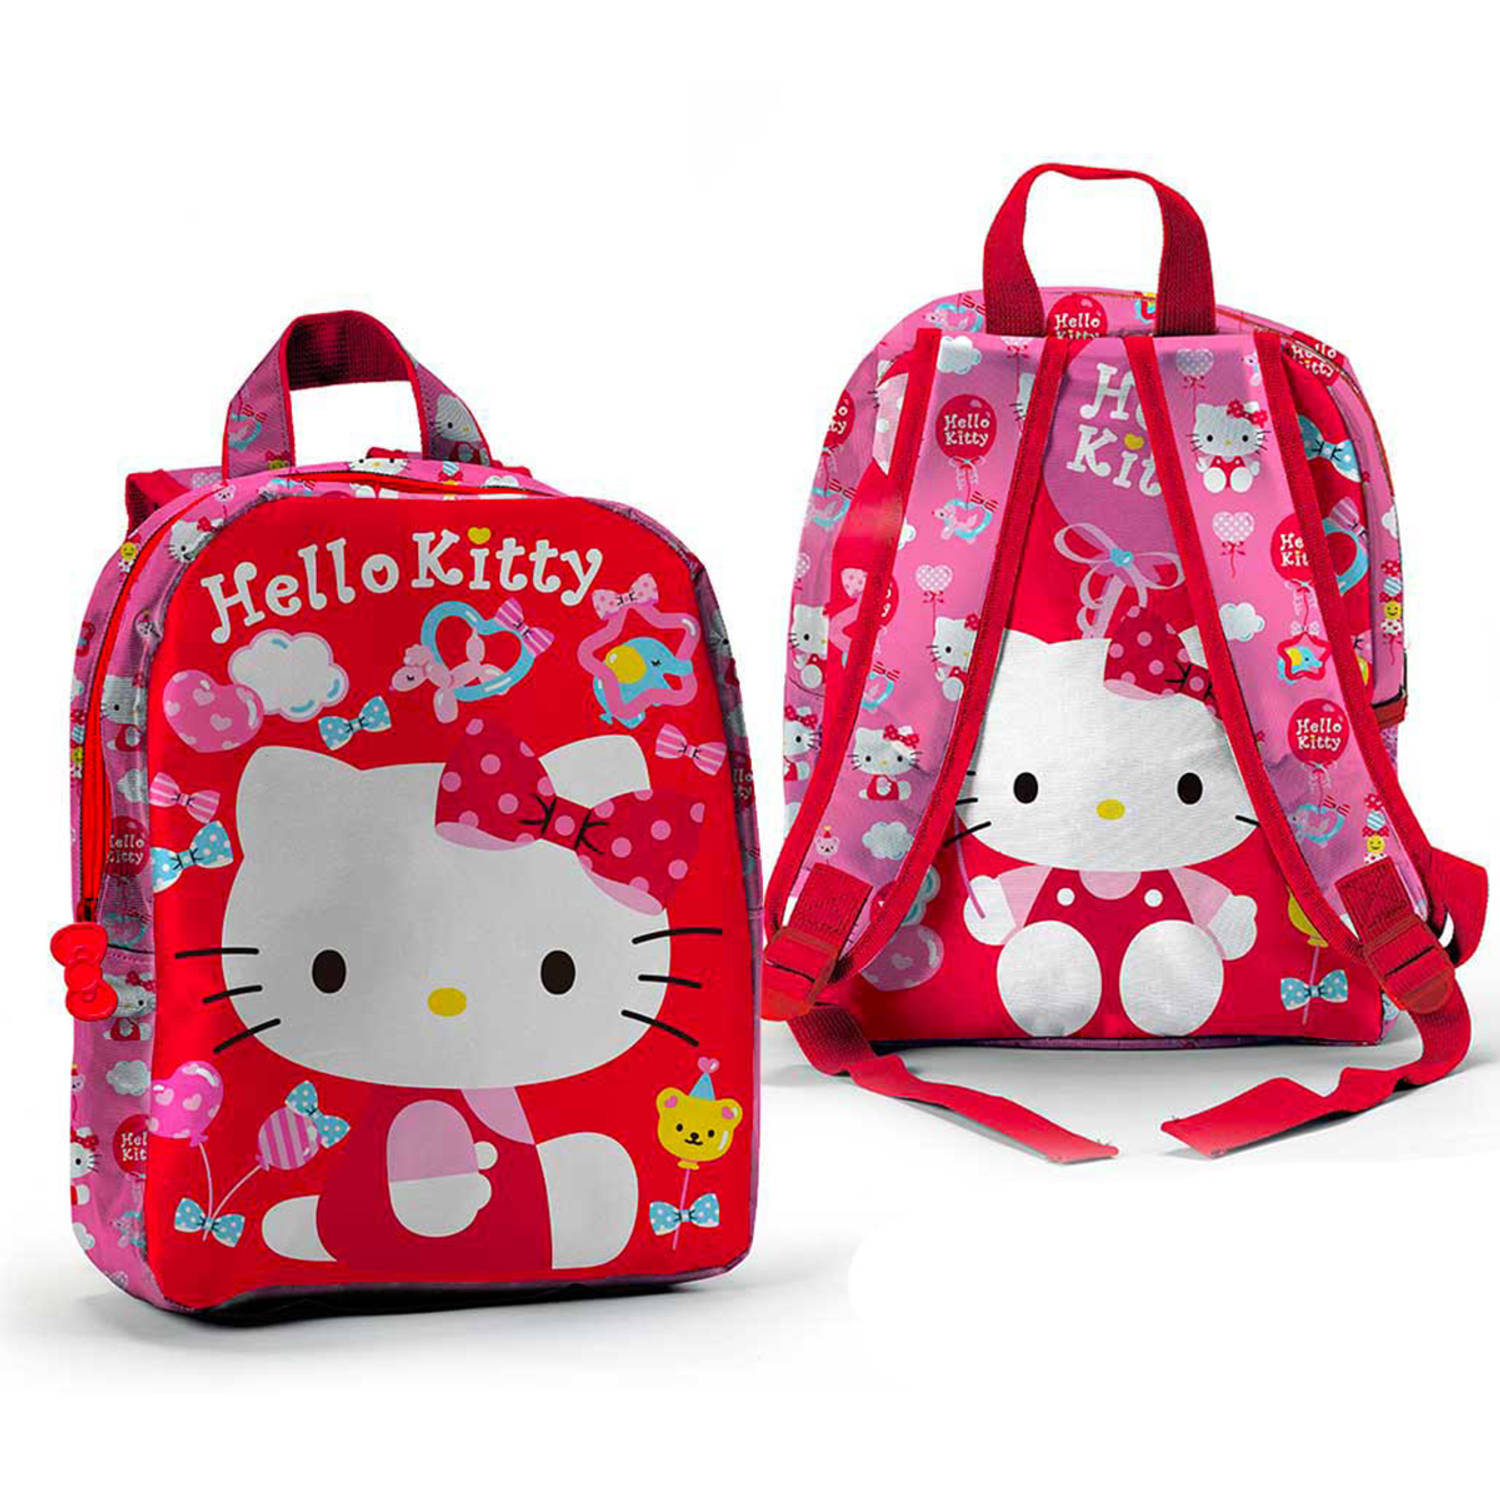 Hello Kitty Peuterrugzak Cute - 27 x 22 x 8 cm - Polyester